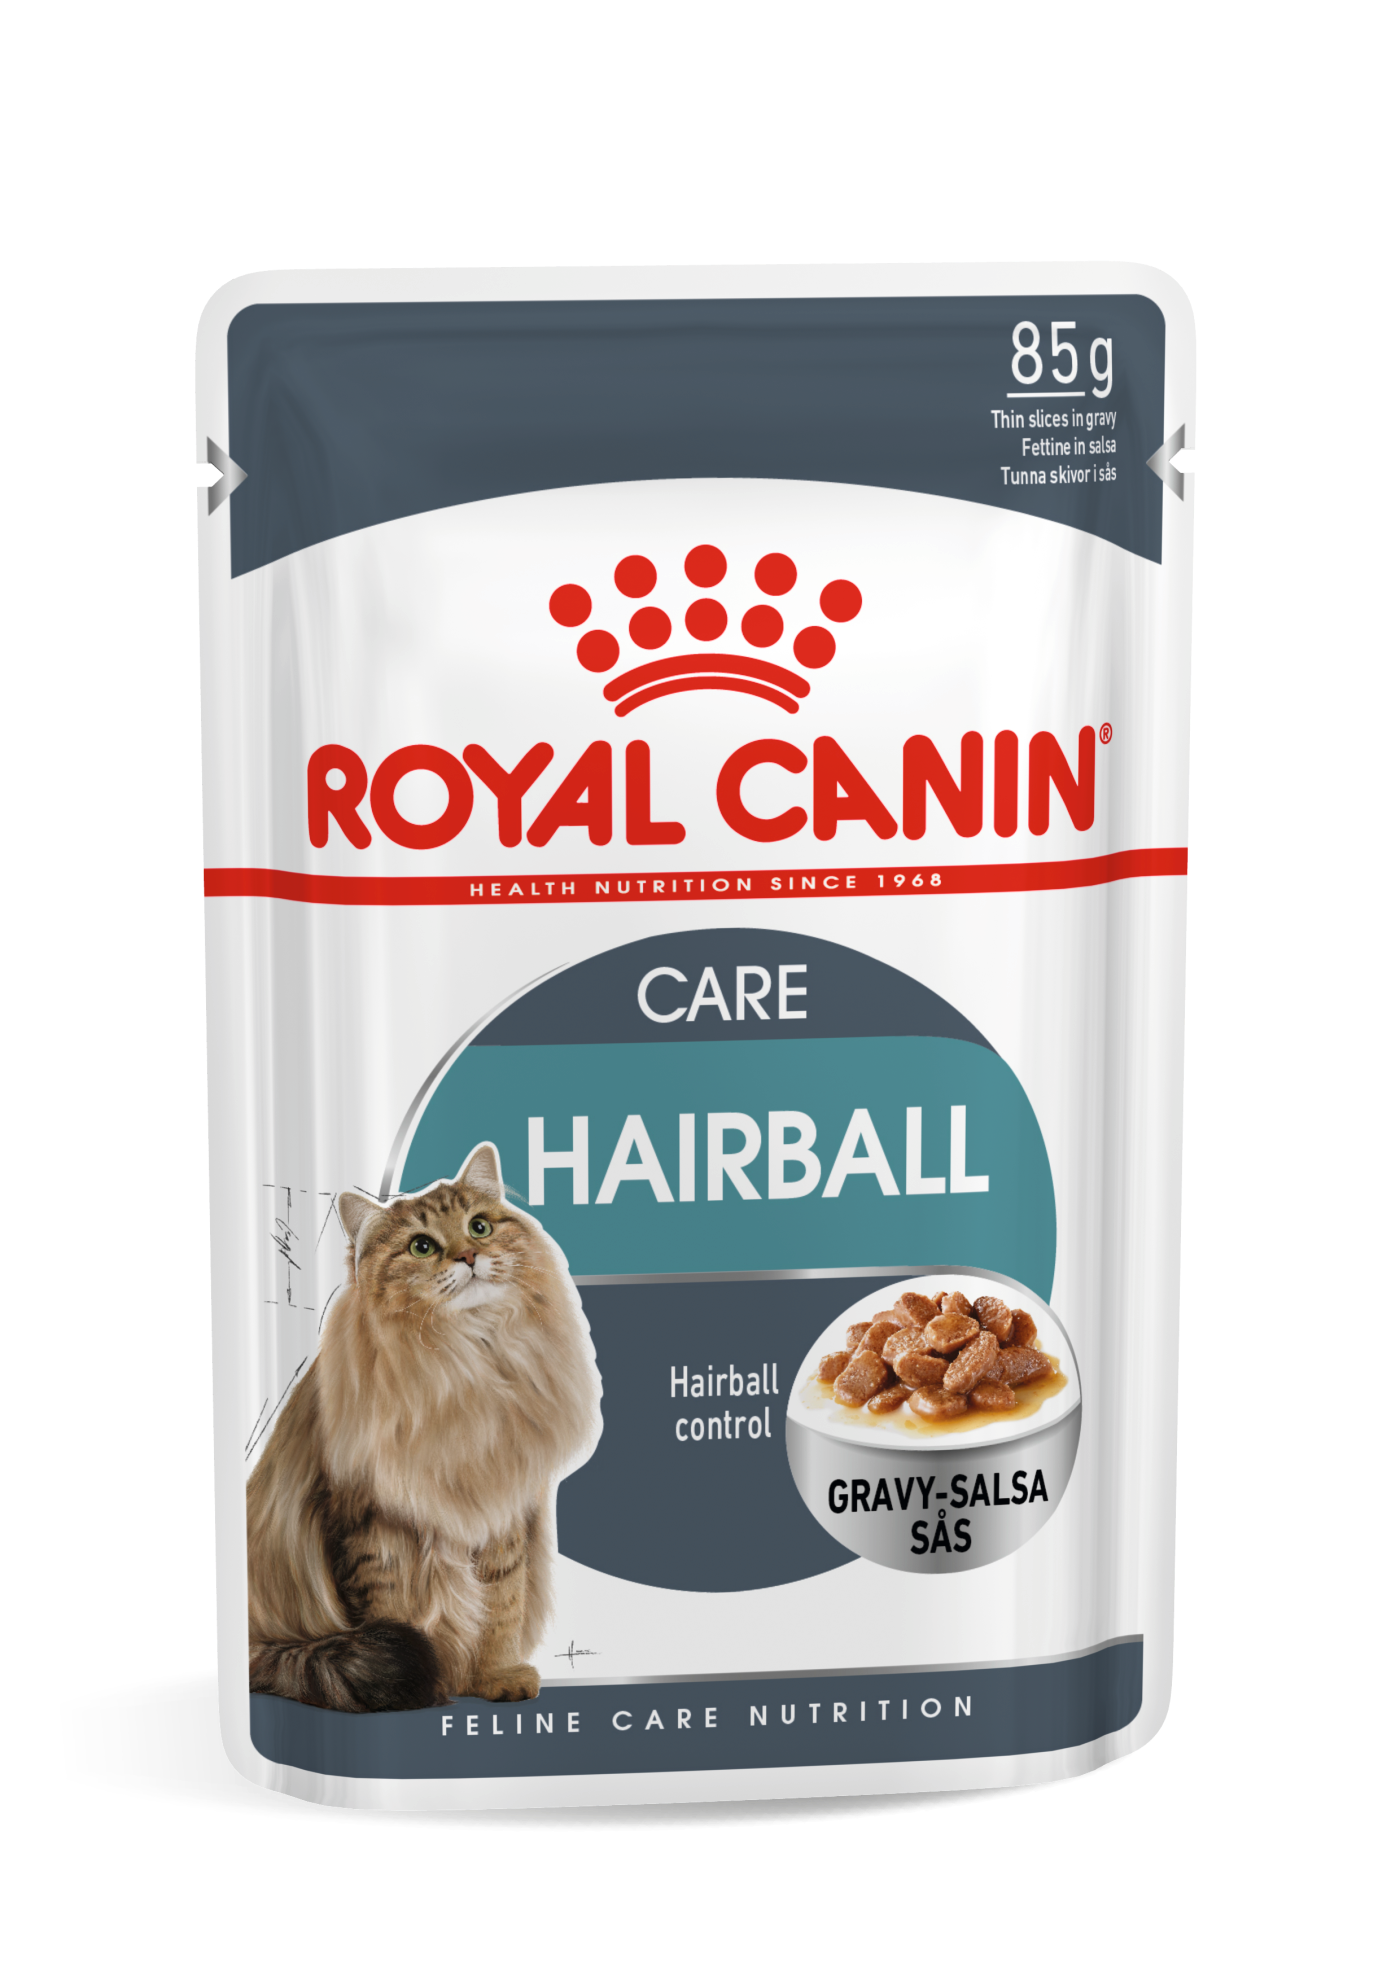 royal canin hairball dry cat food